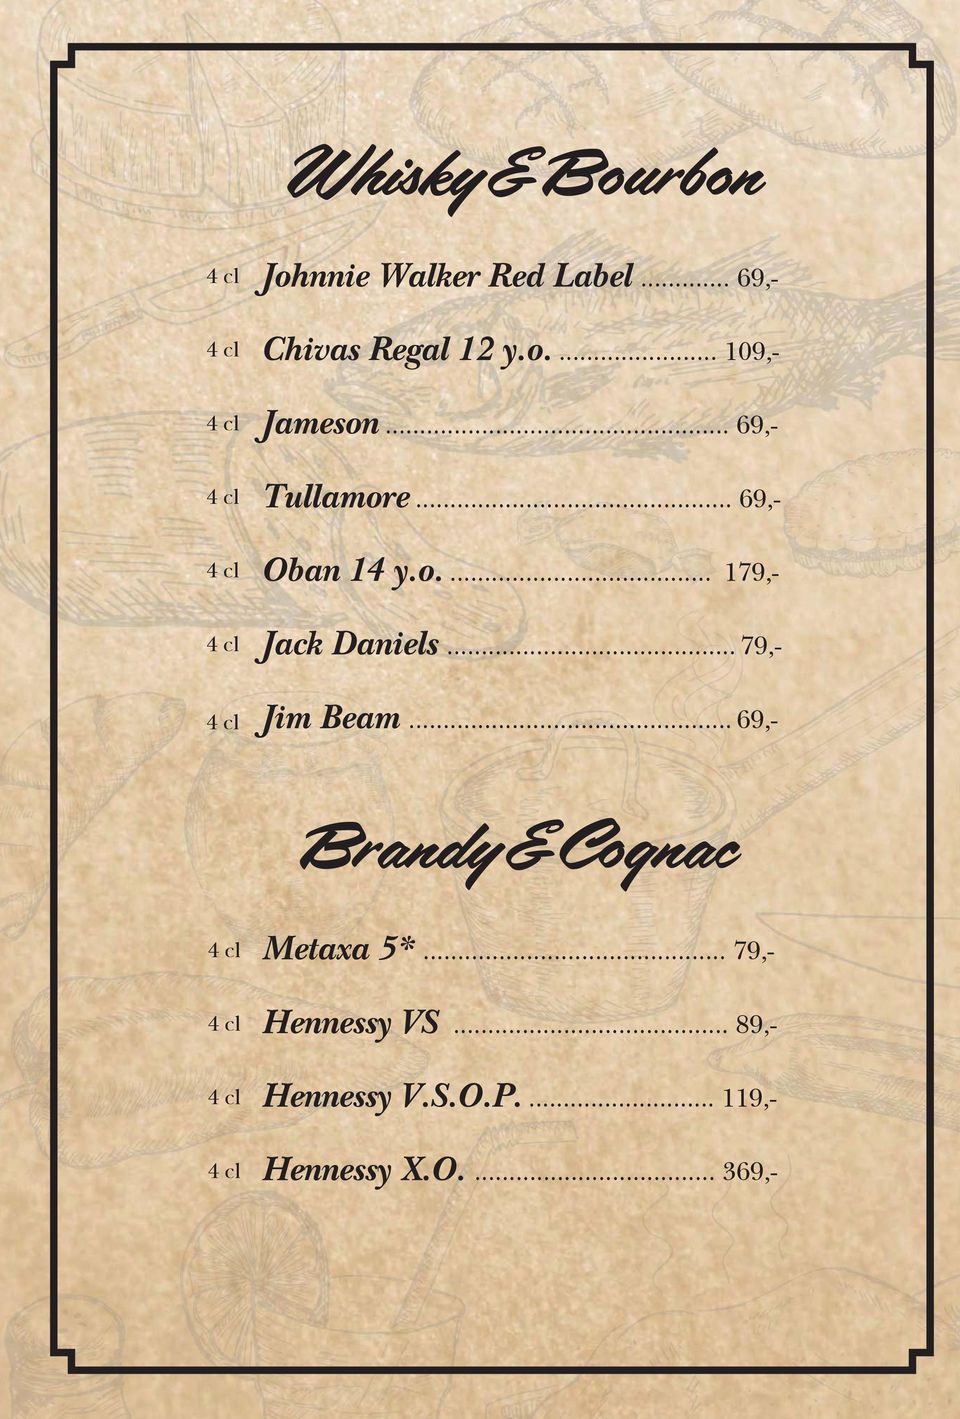 .. 79,- Jim Beam... 69,-. Brandy&Cognac Metaxa 5*... 79,- Hennessy VS.